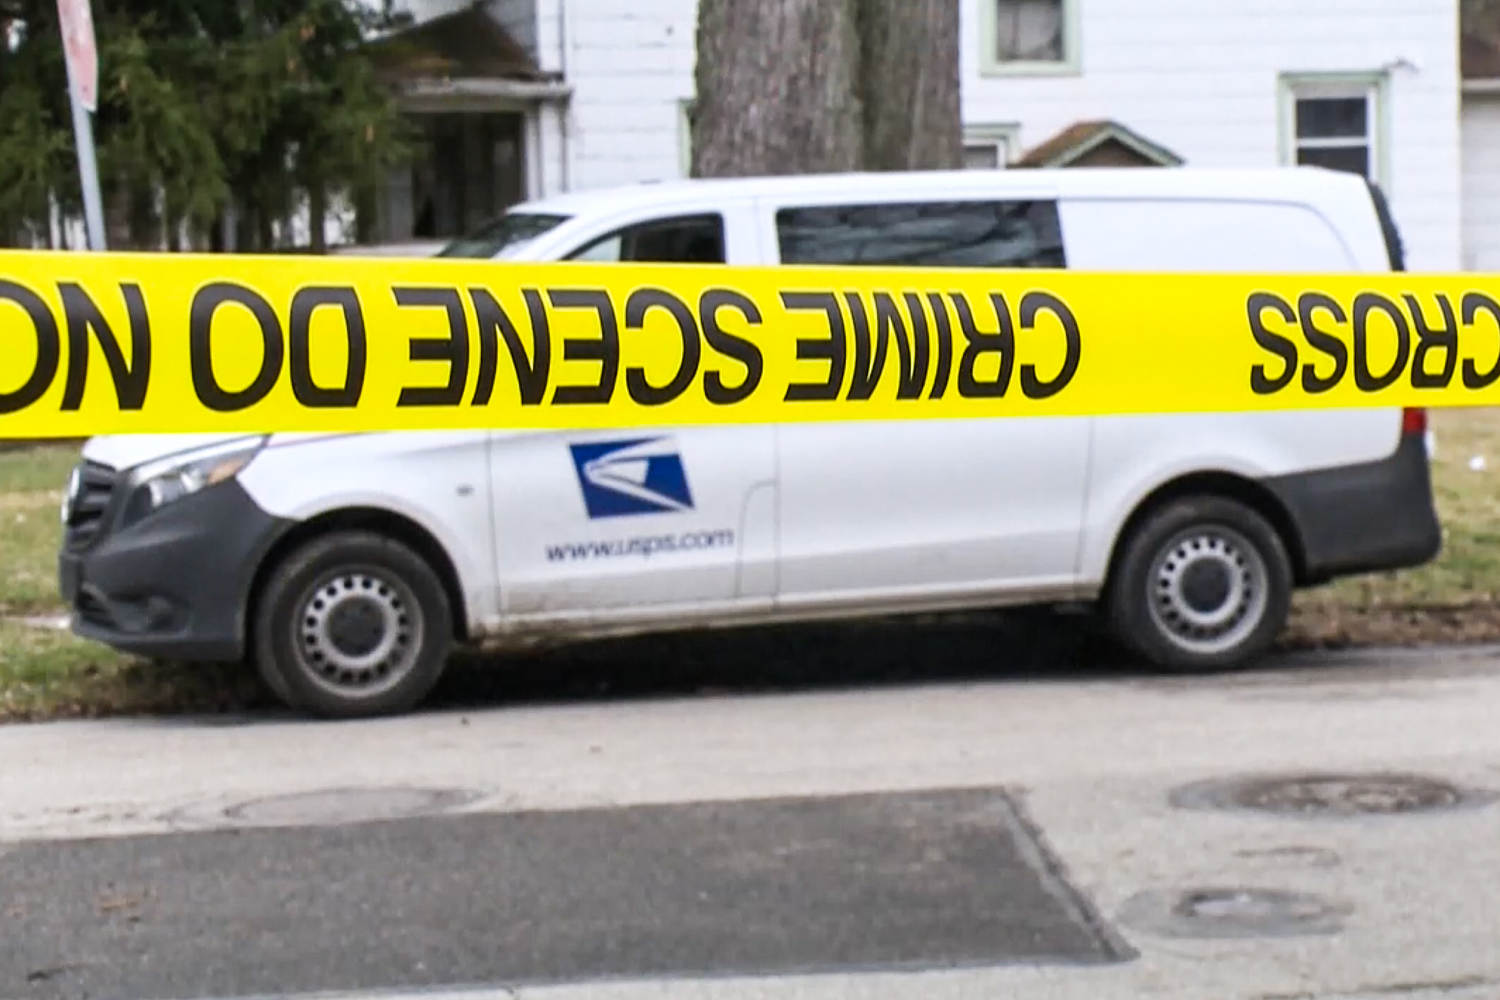 Mail carrier fatally shot in postal van in Ohio